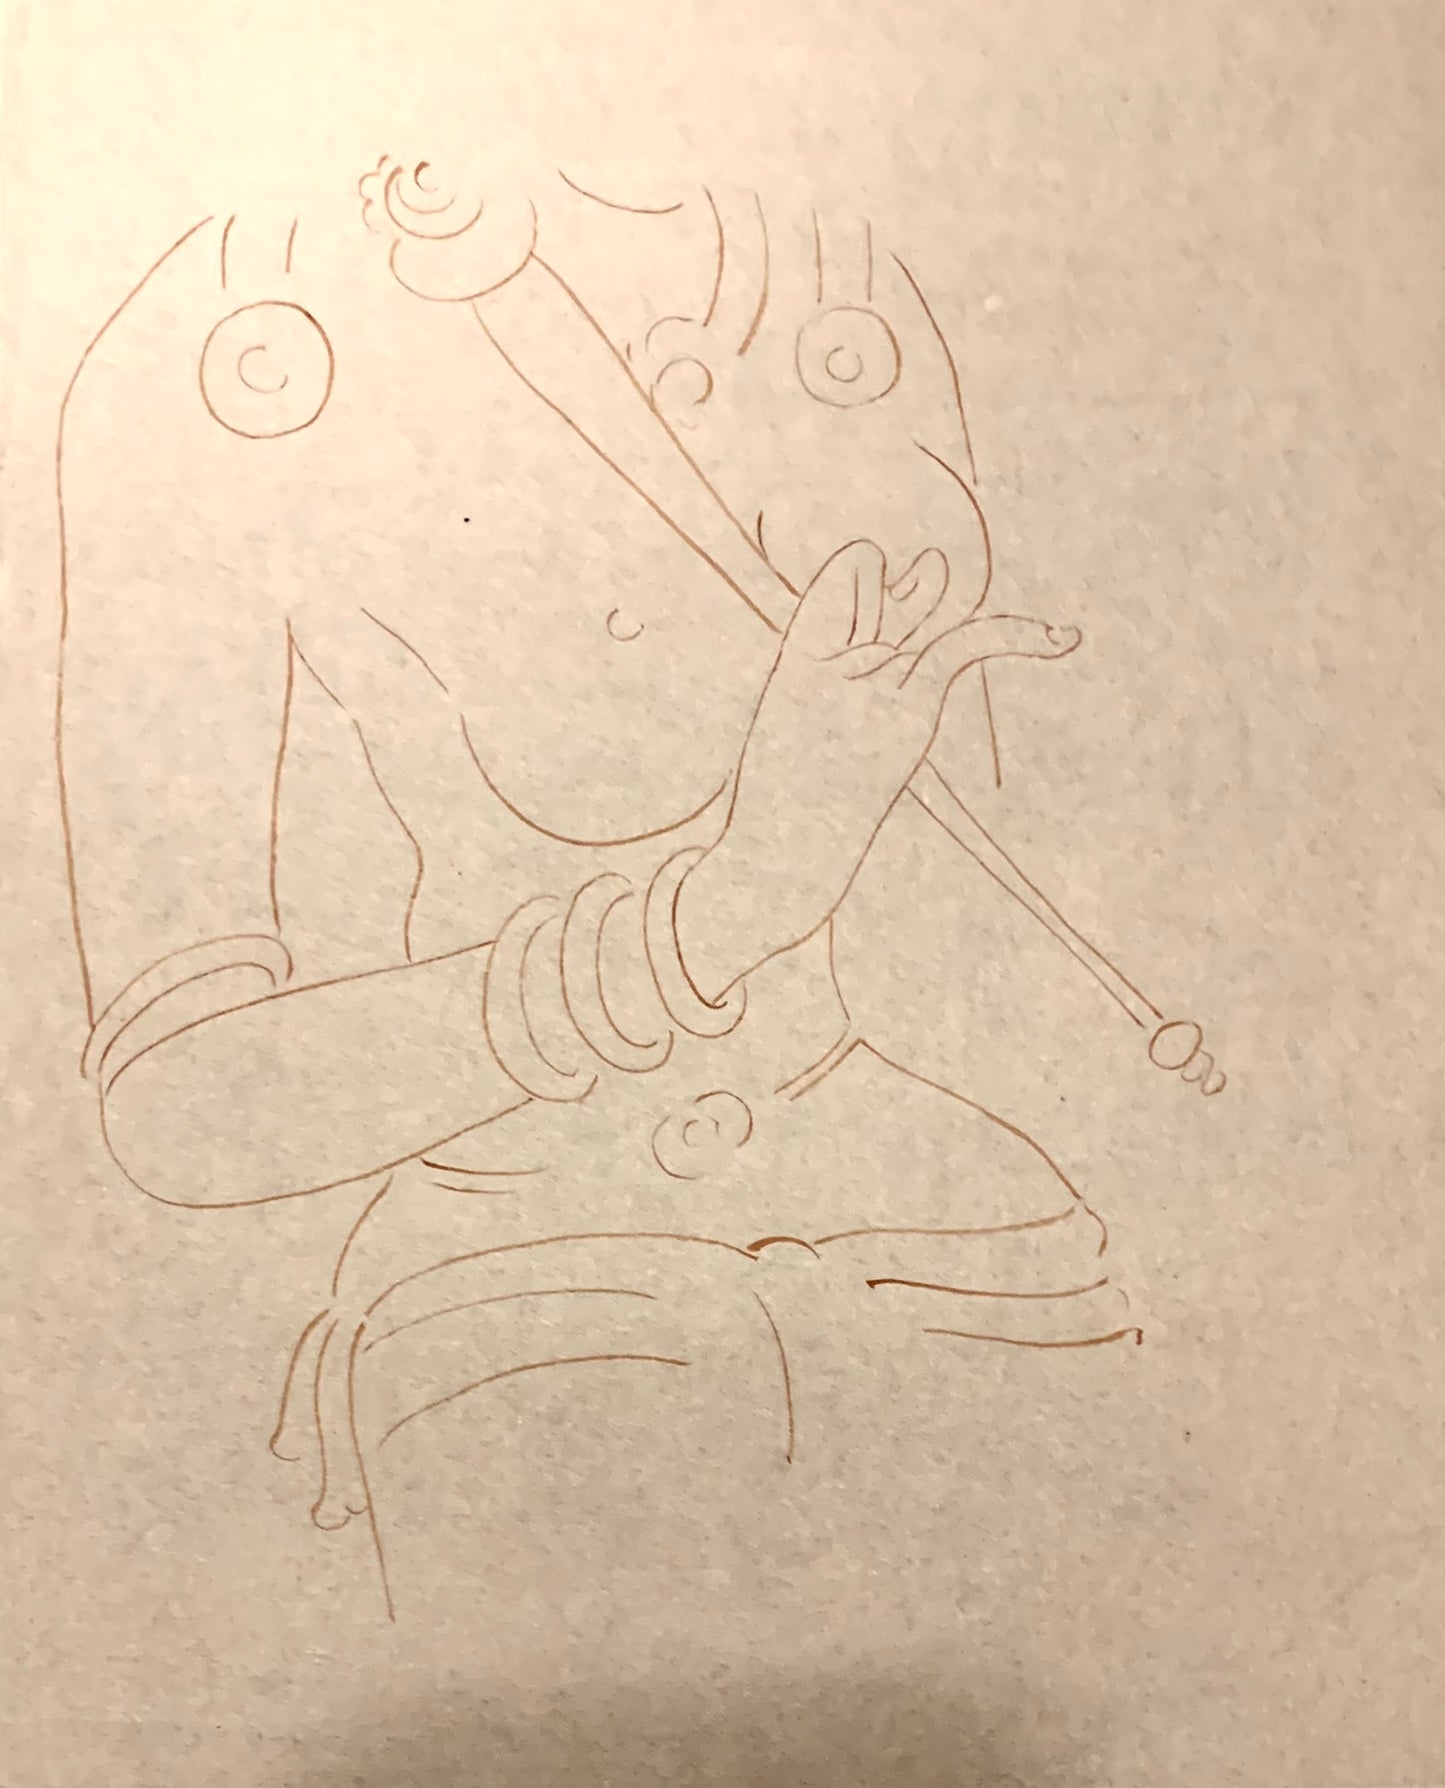 Drawings with Hindu and Buddhist Sri Lankan deities from Anuradhapura and Poḷonnaruwa.